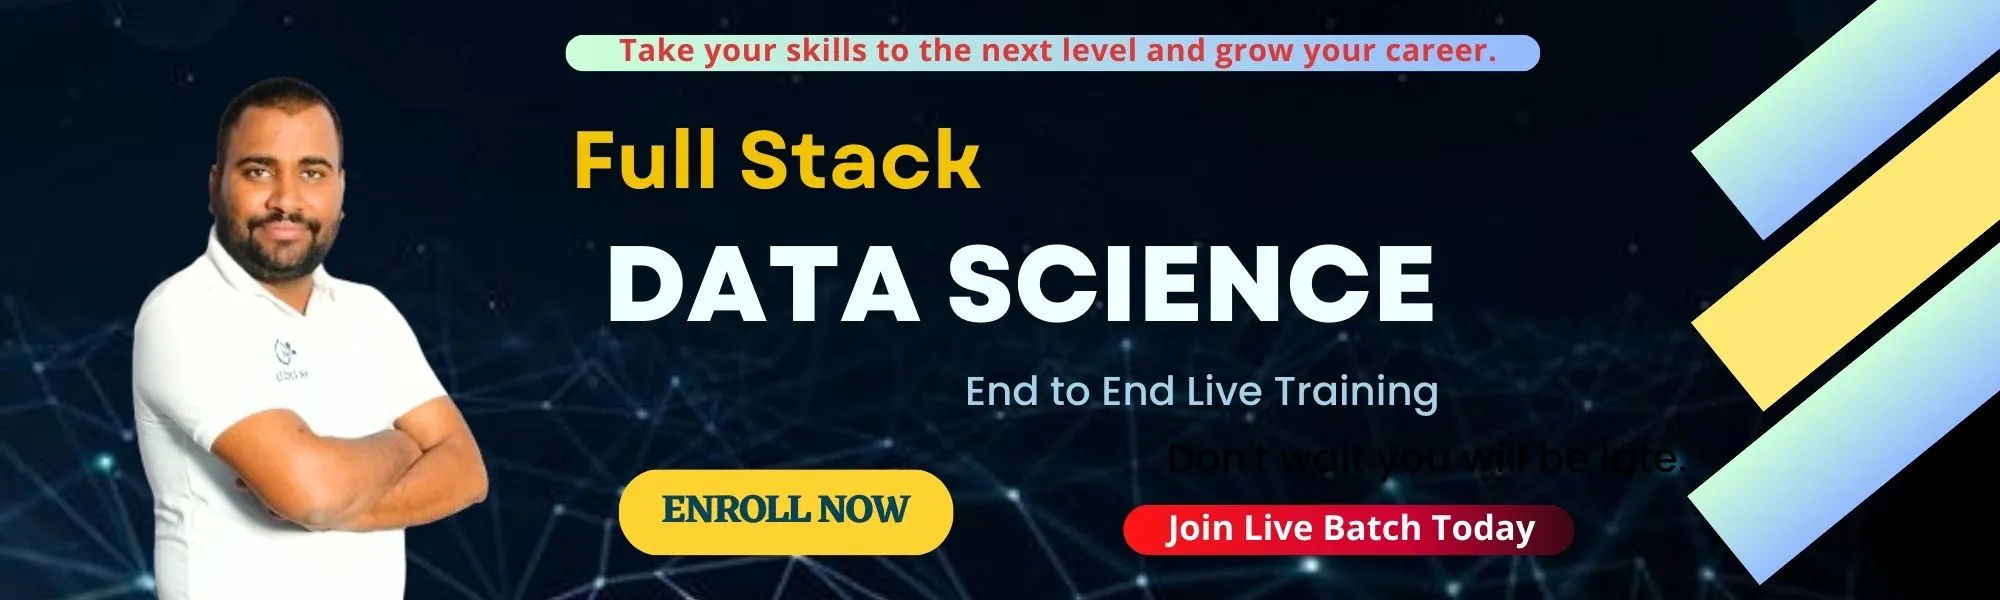 Full Stack Data Science